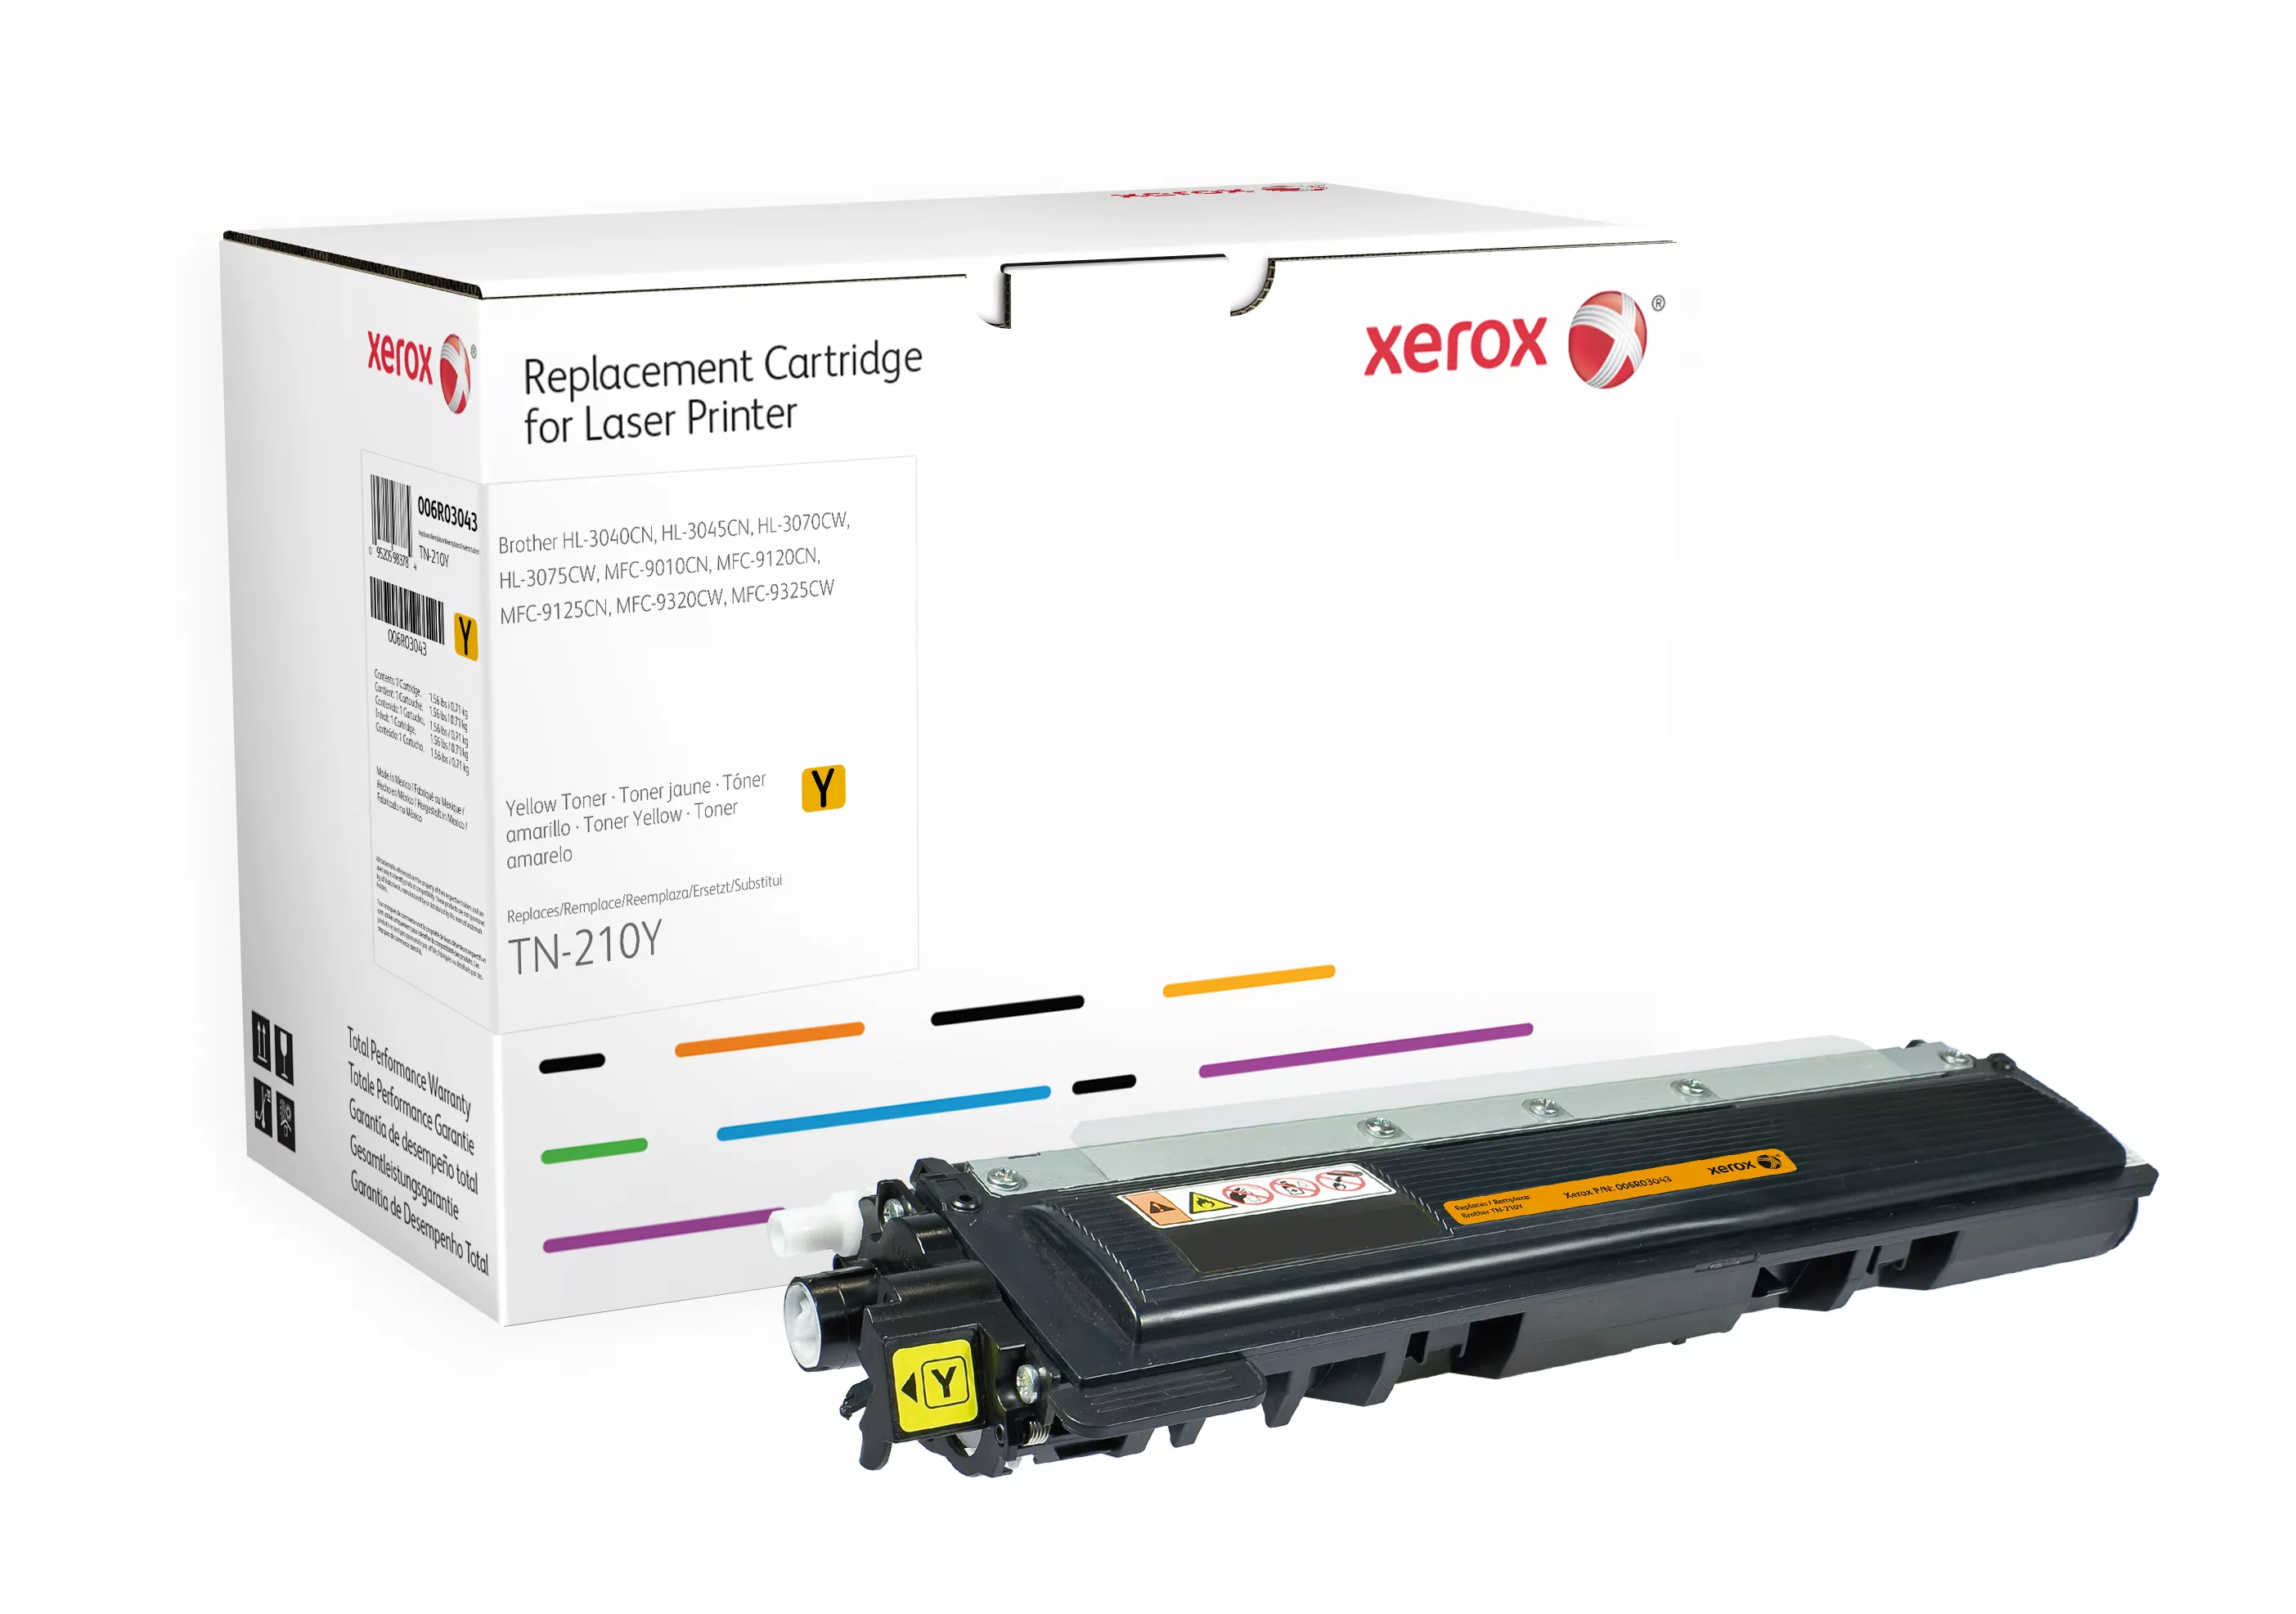 Achat XEROX Brother HL-3040/3070 Series TN-230Y et autres produits de la marque Xerox